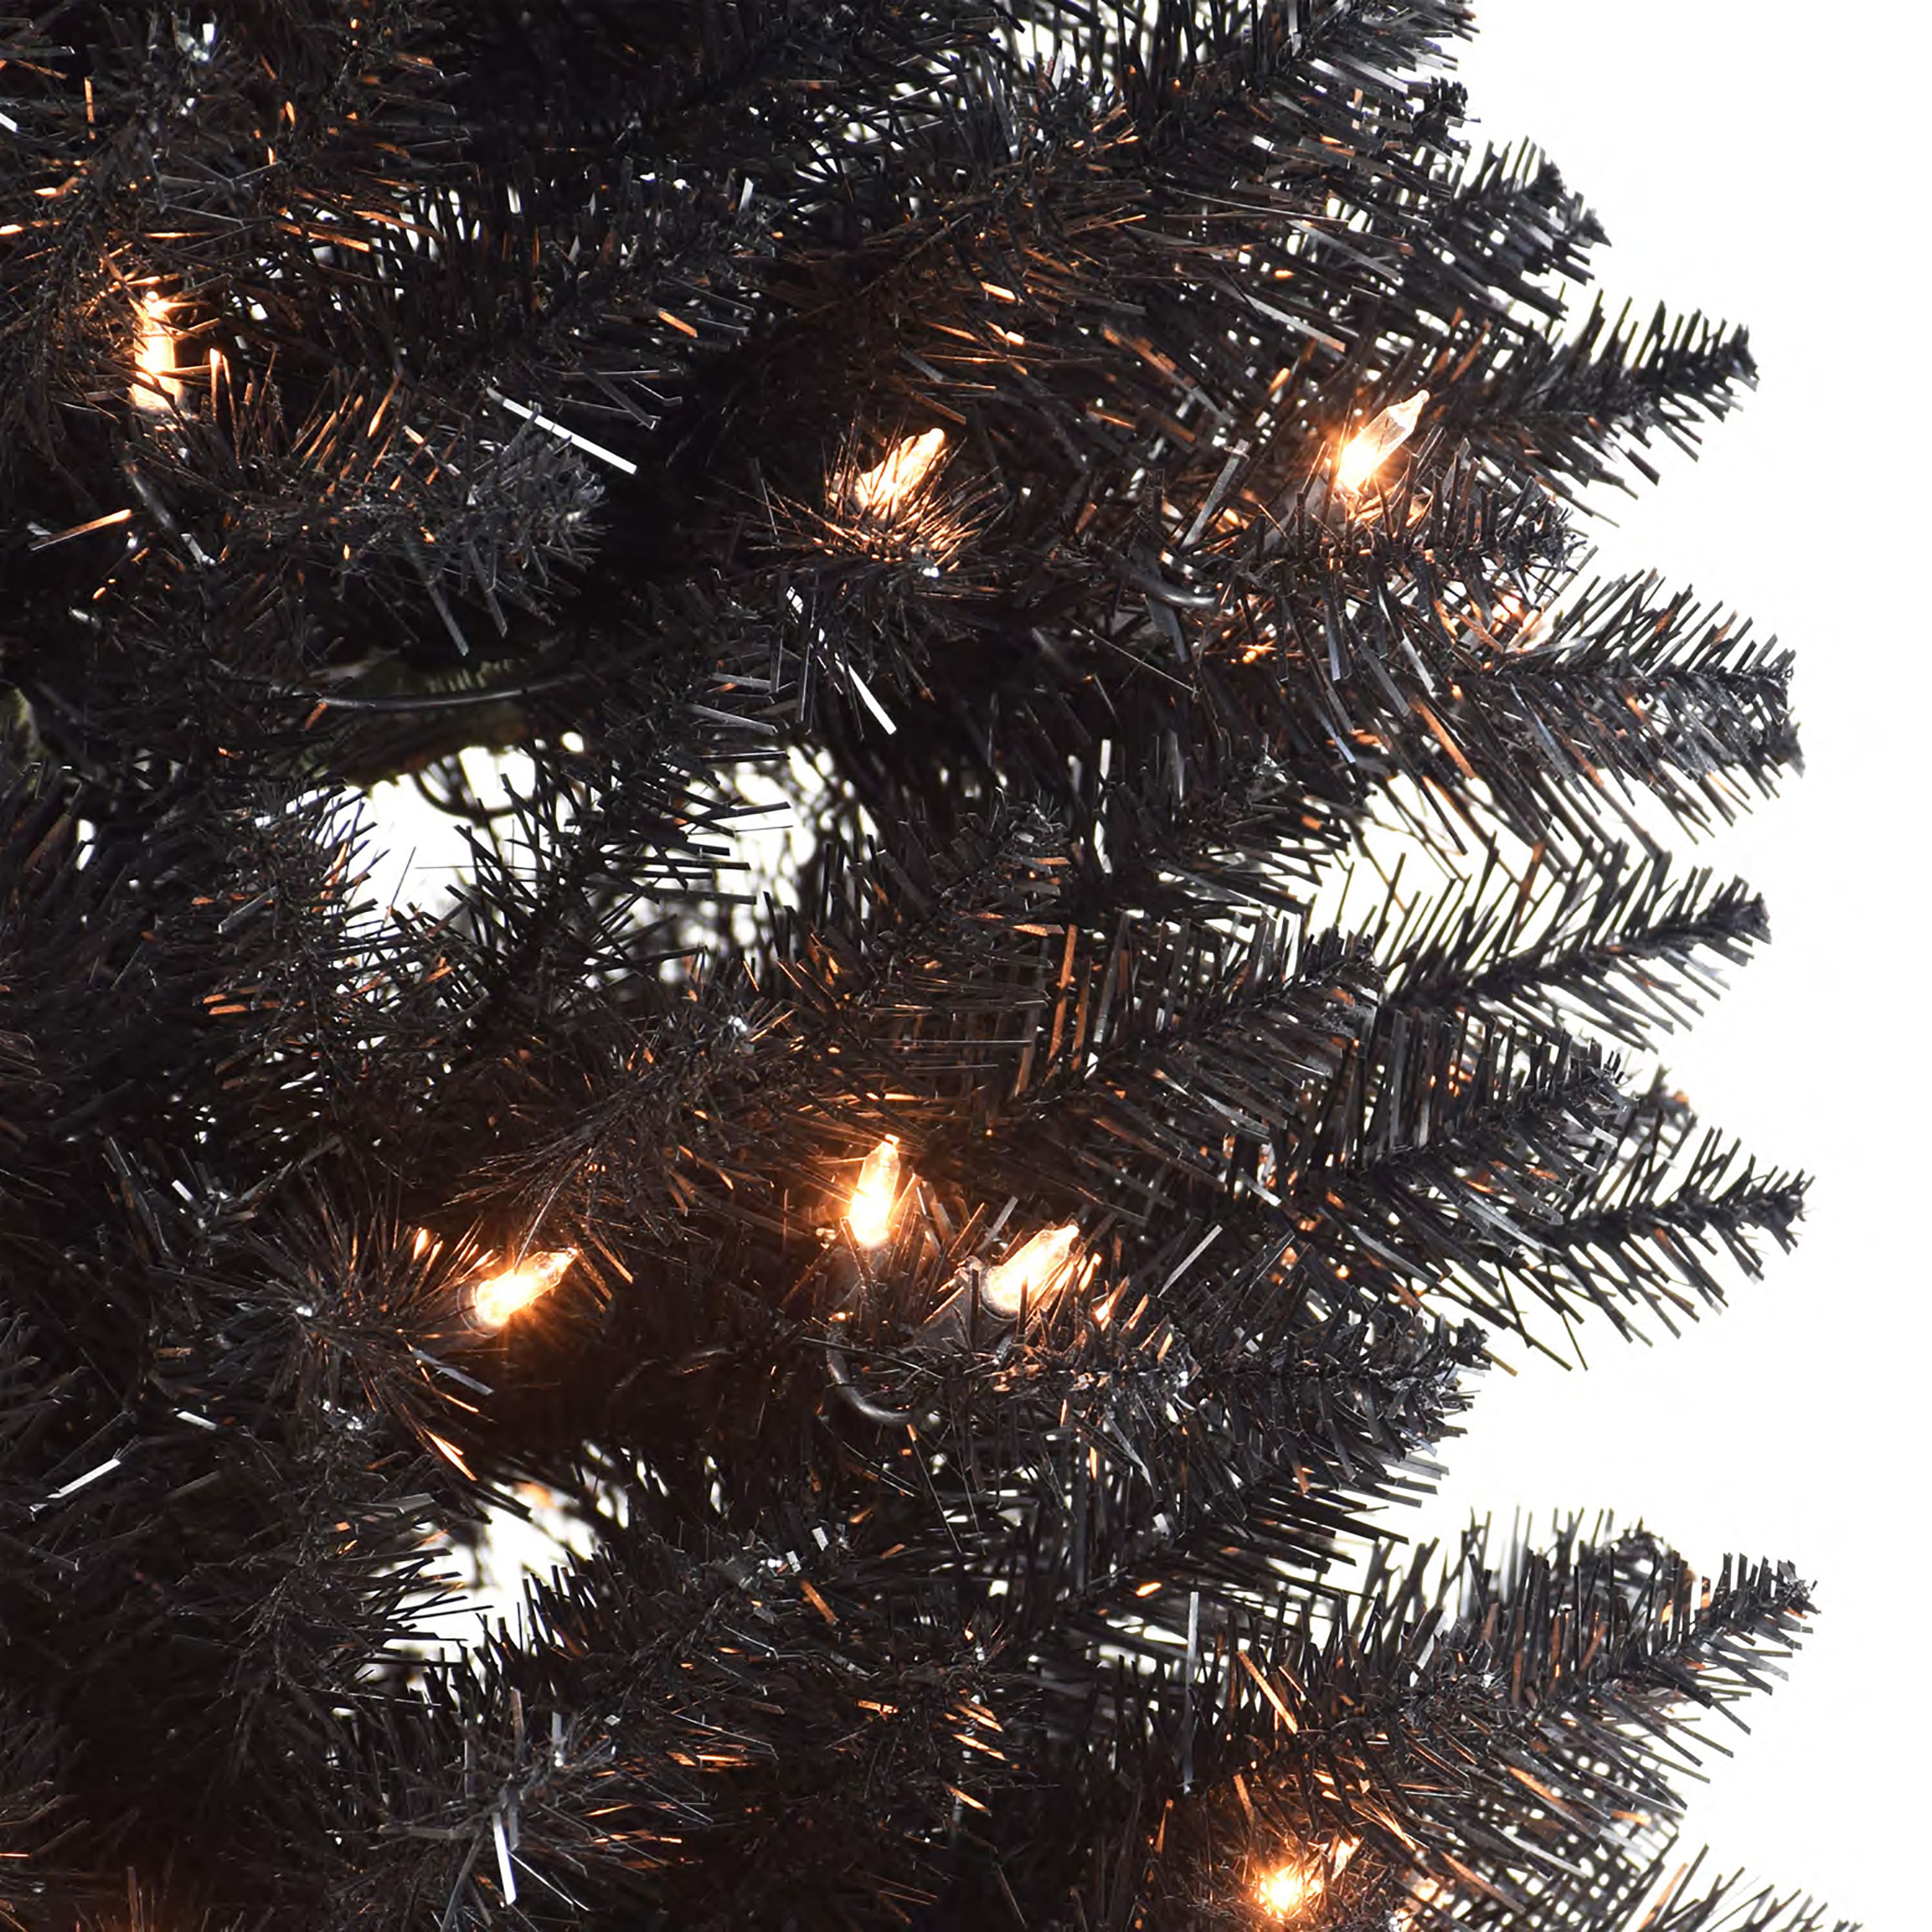 6 Pack: 6.5ft. Pre-Lit Black Pencil Fraser Fir Artificial Christmas Tree, Clear Lights